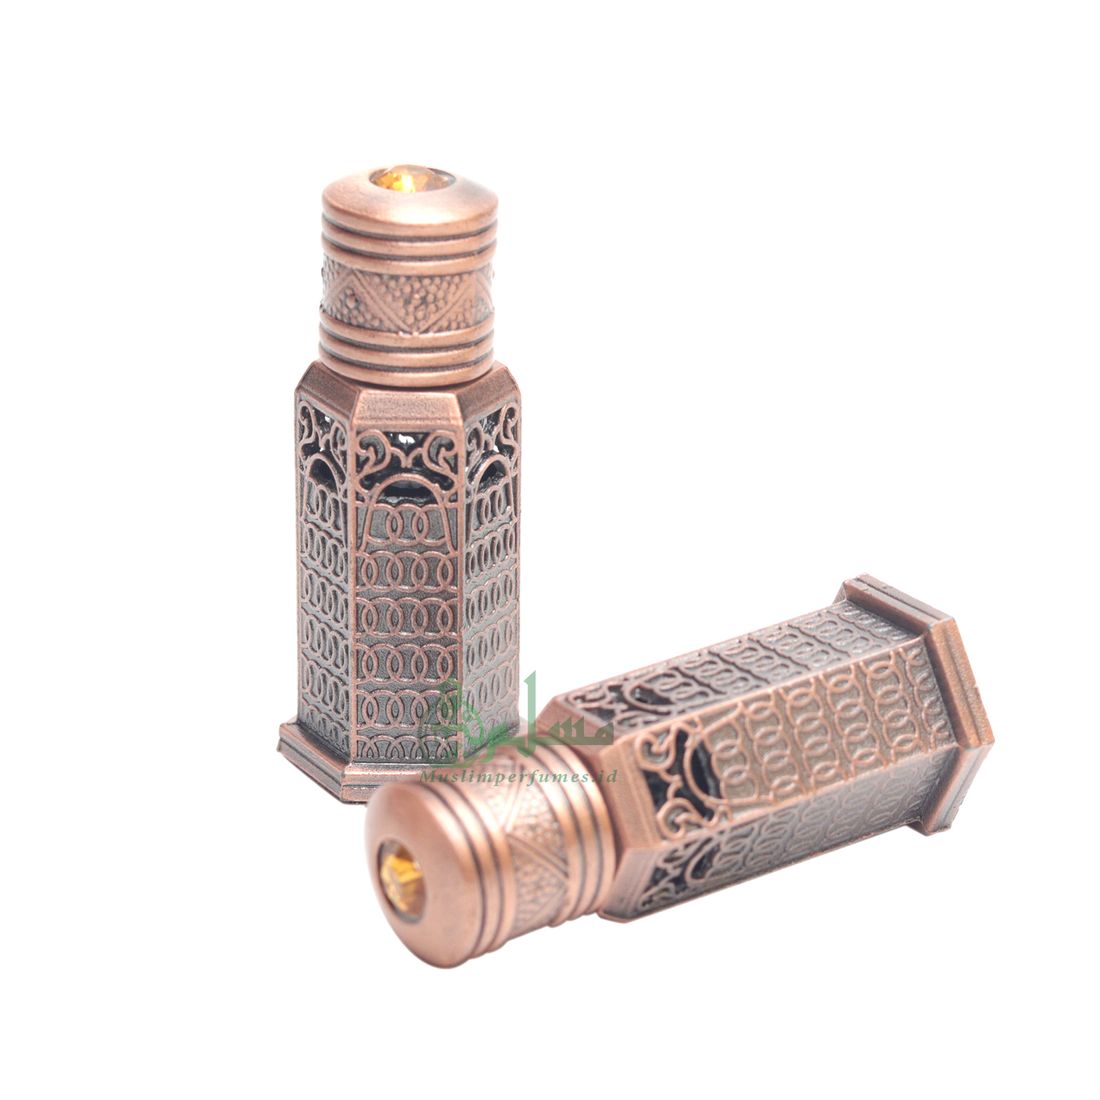 Decorative Minaret Masjid Design Metal Bronze Color Islamic Encased for Perfume Attar Oud 6-sided 3-ml Vial EMPTY Bottle Glass Dipper Cap